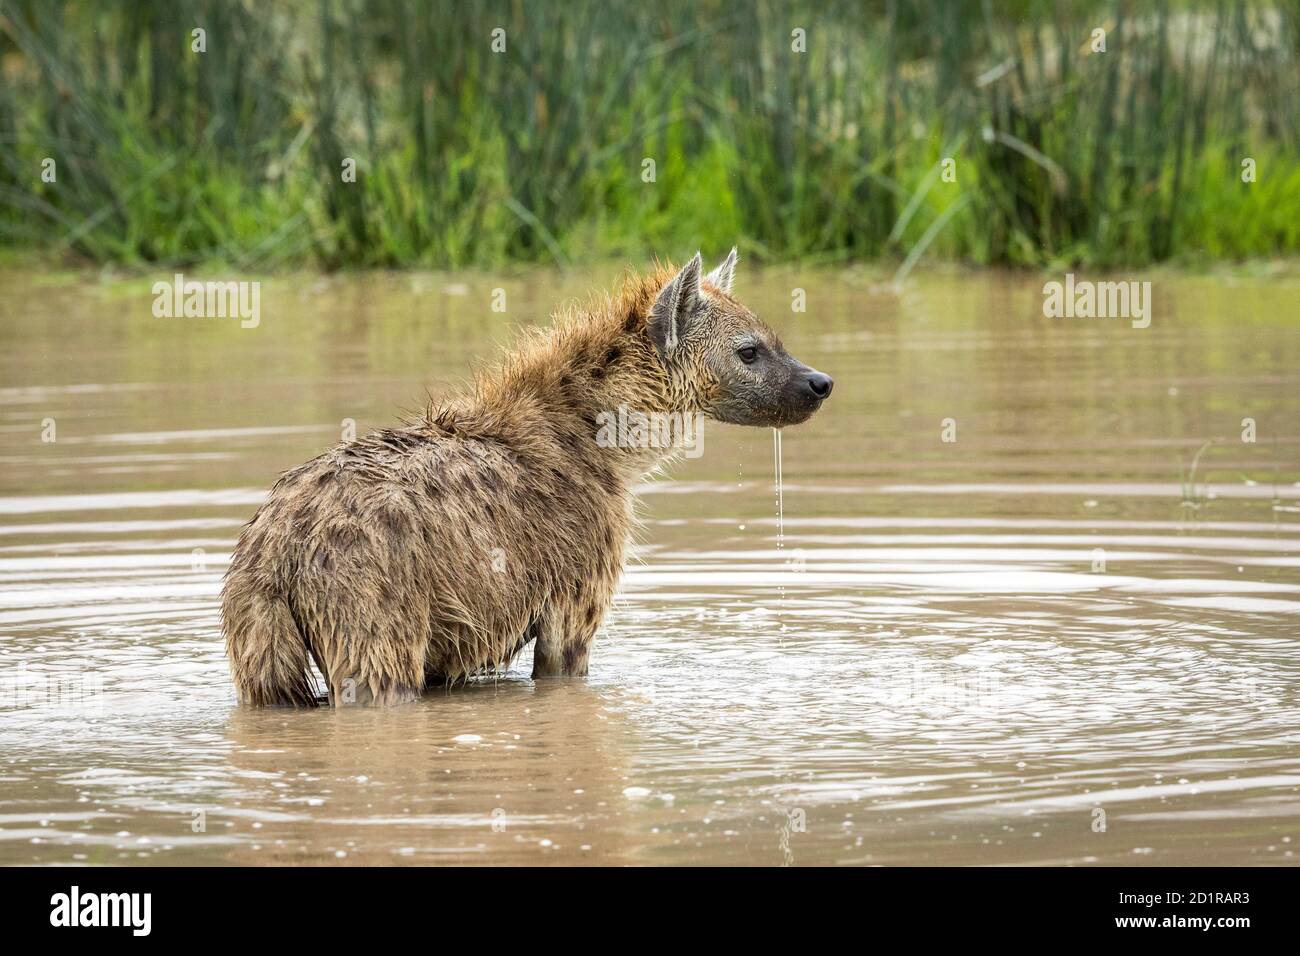 Adult hyena standing in water looking alert in Ngorongoro Crater in Tanzania Stock Photo